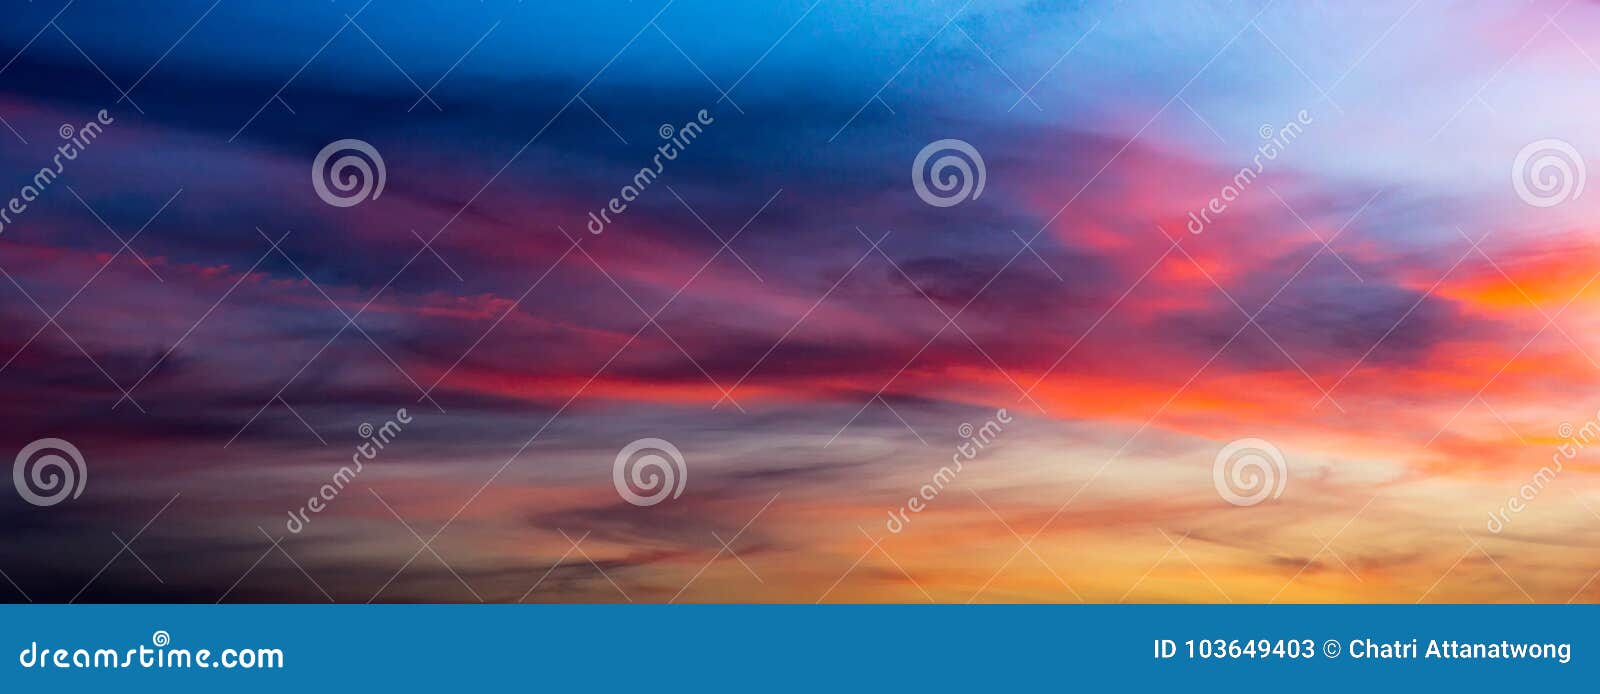 colorful cirrus cloud on twilight sky